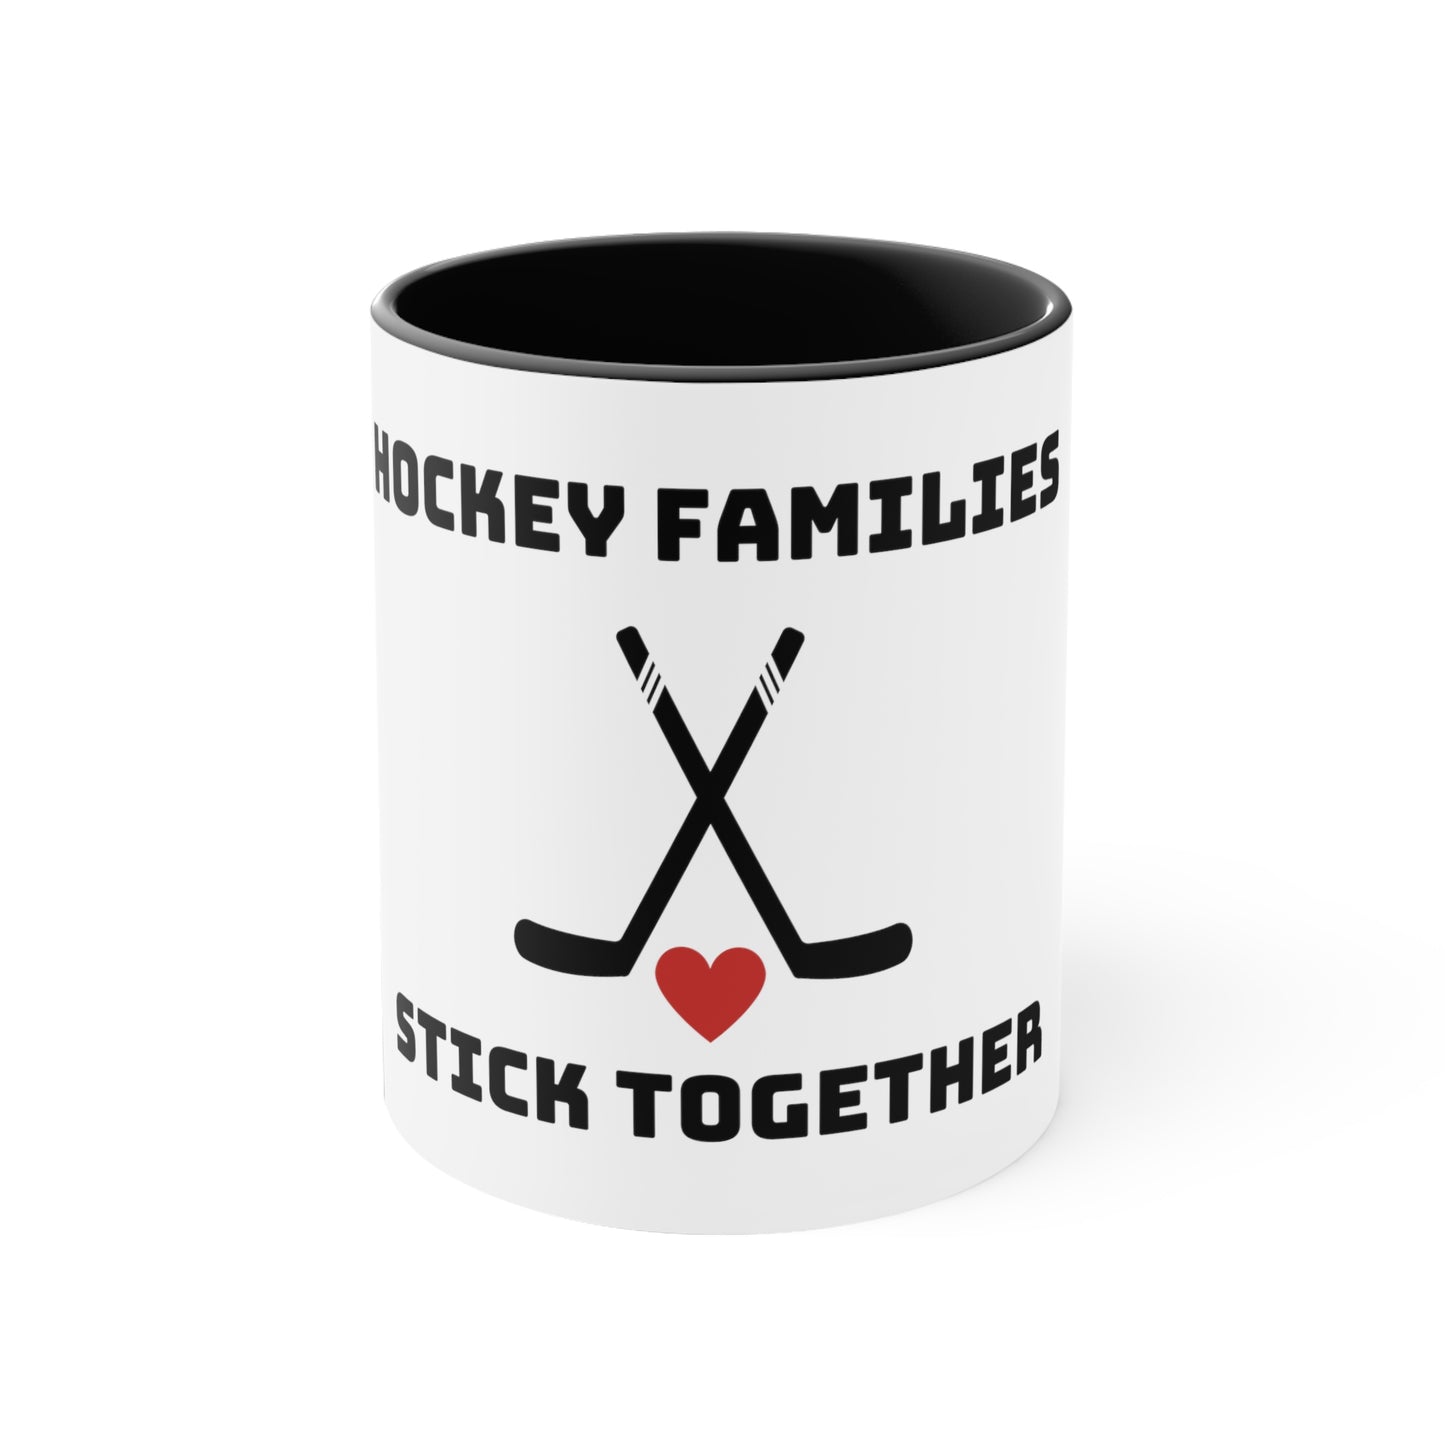 Hockey Families Stick Together Mug